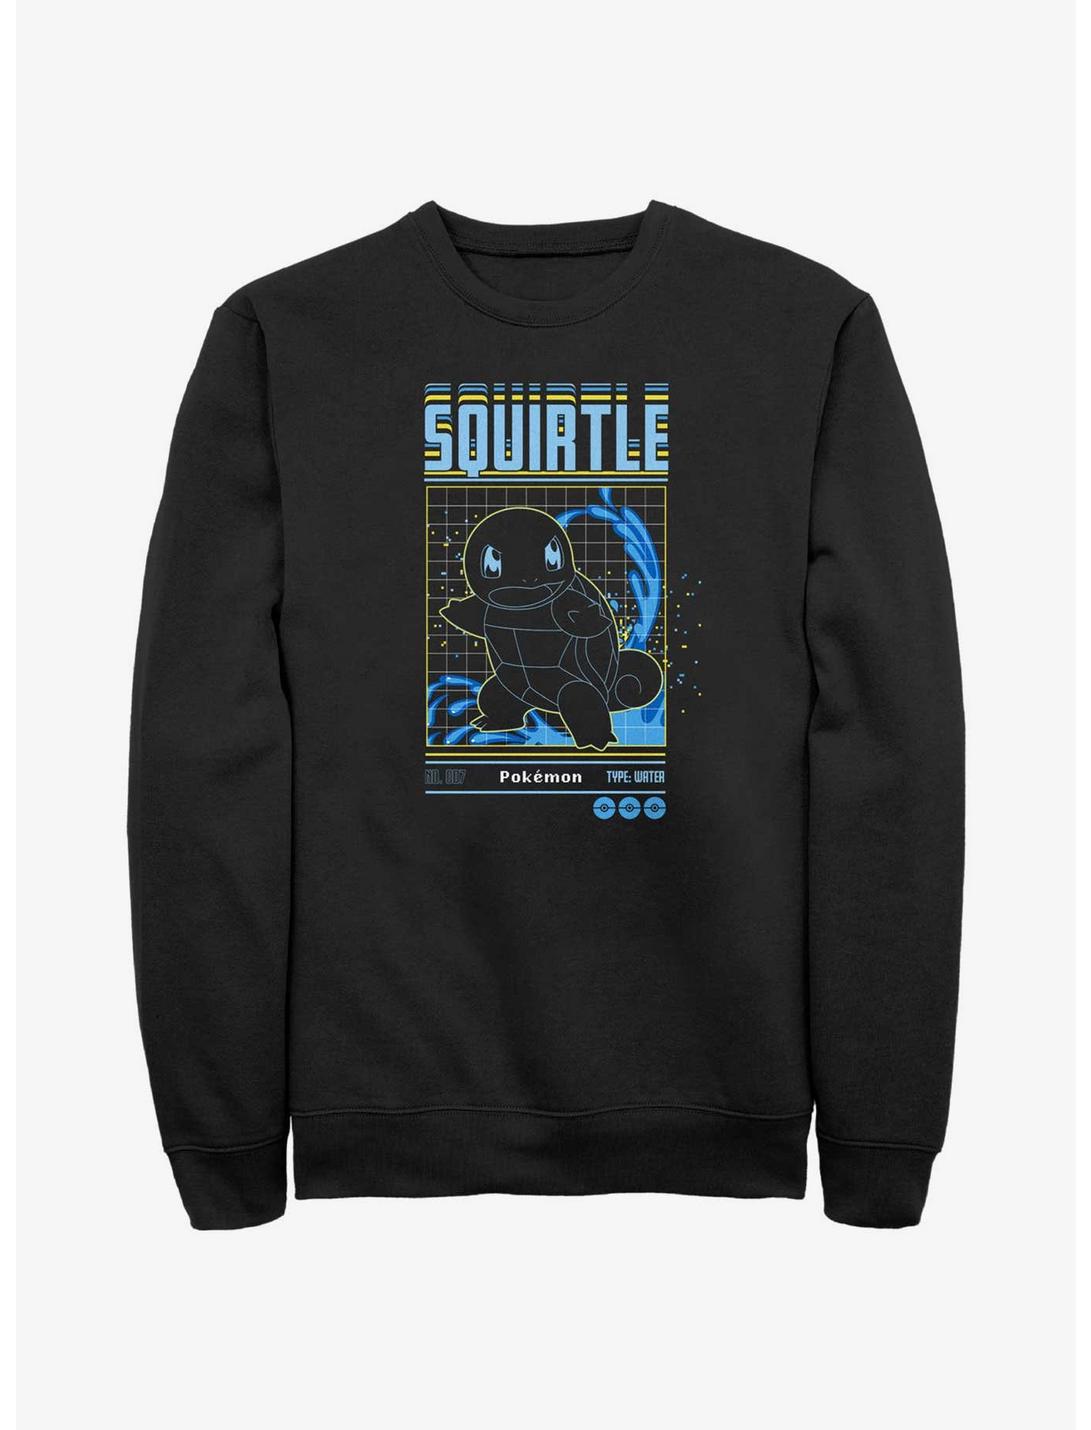 Pokemon Squirtle Grid Sweatshirt, BLACK, hi-res